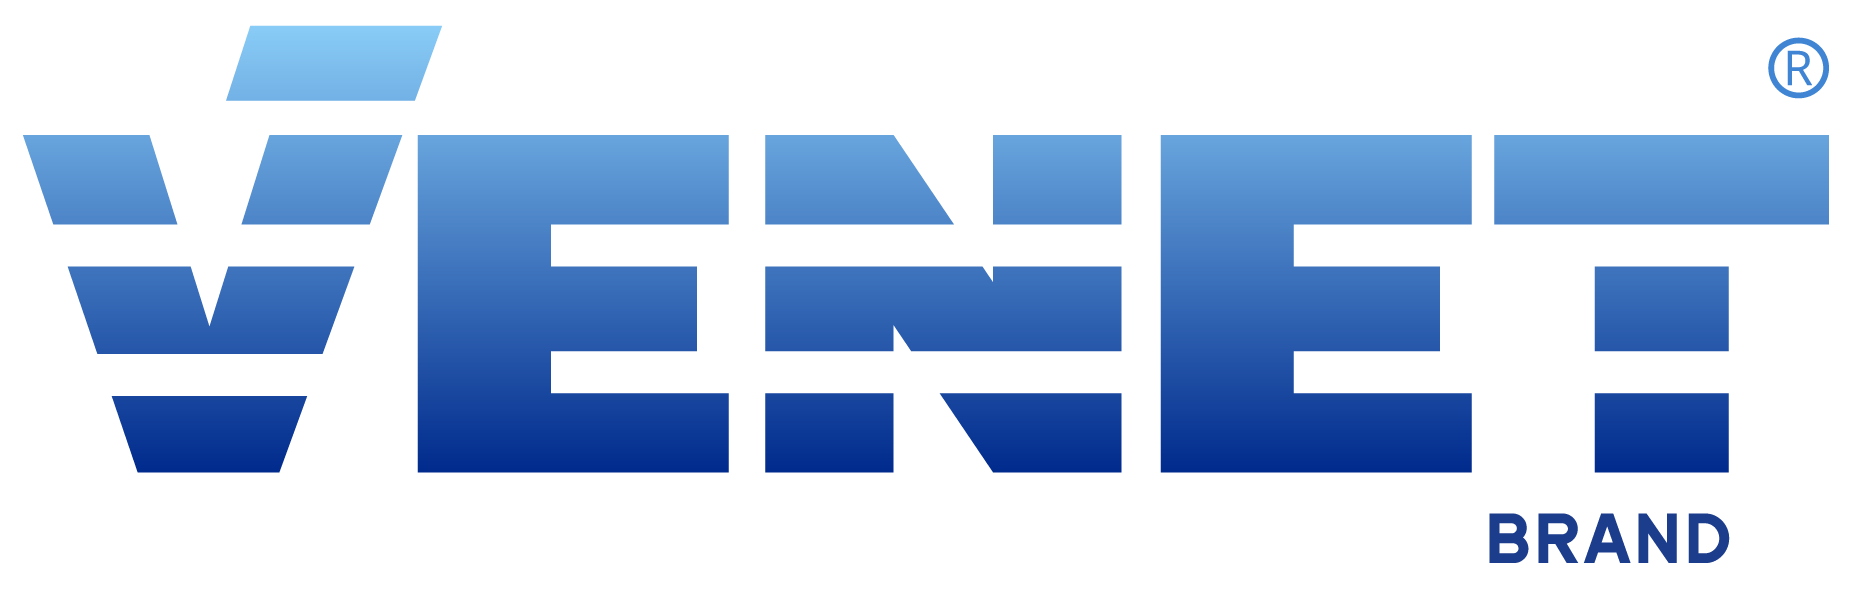 Logo for venus brands